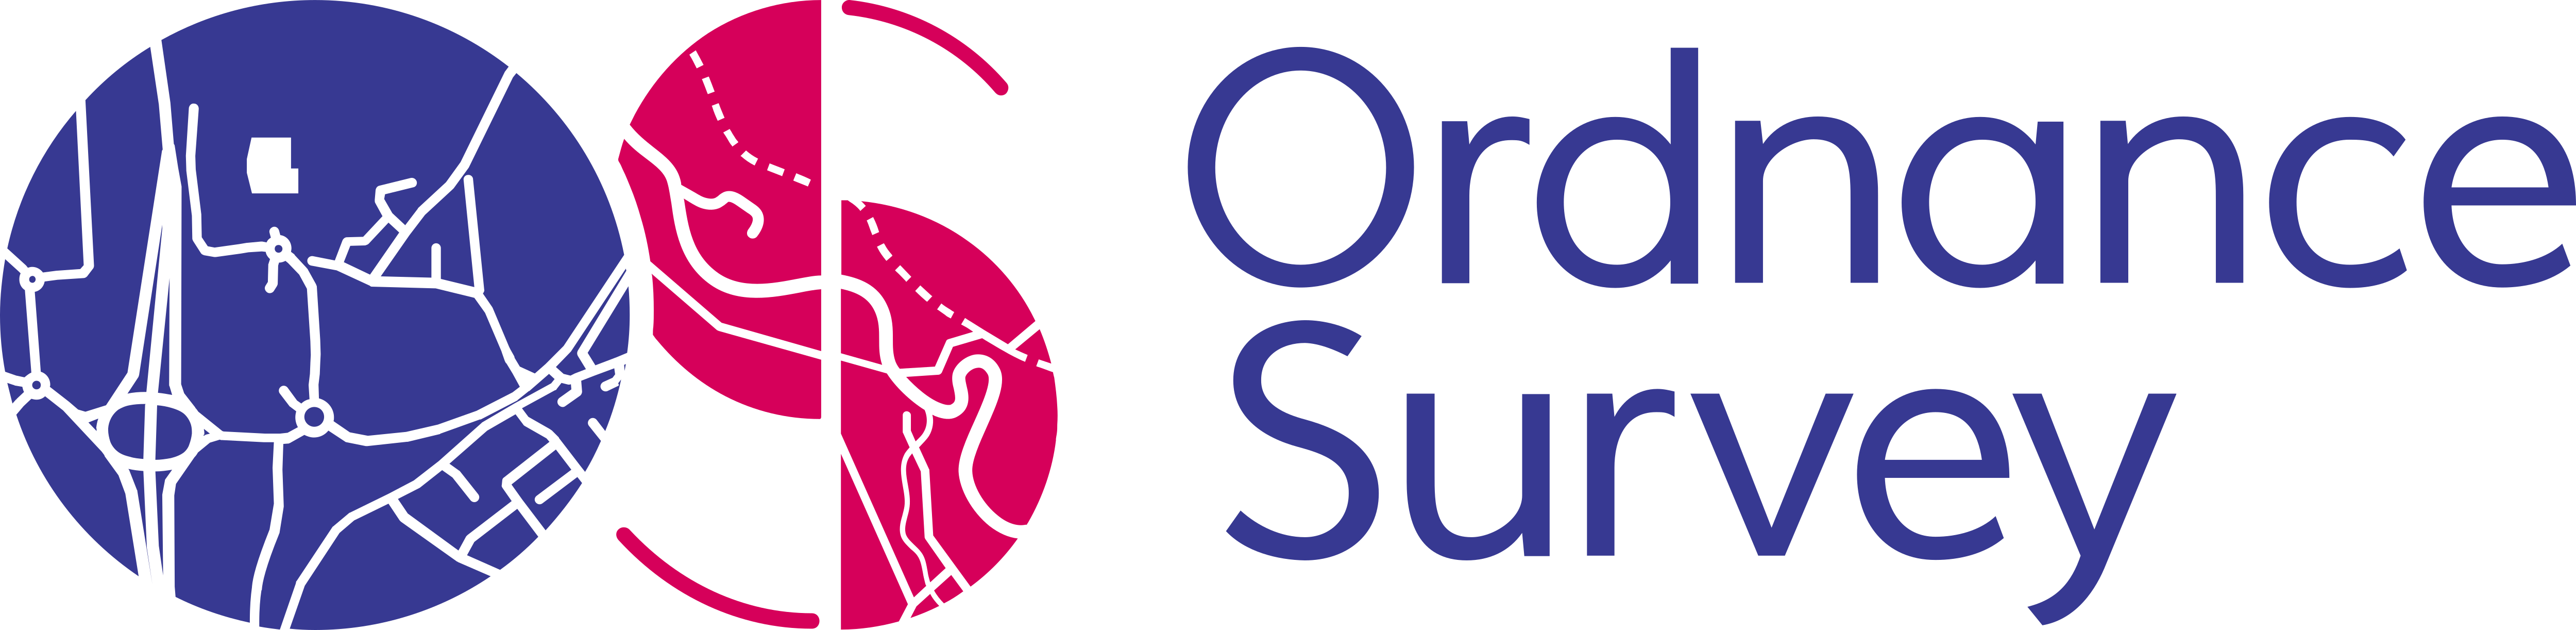 Ordnance_Survey_Logo